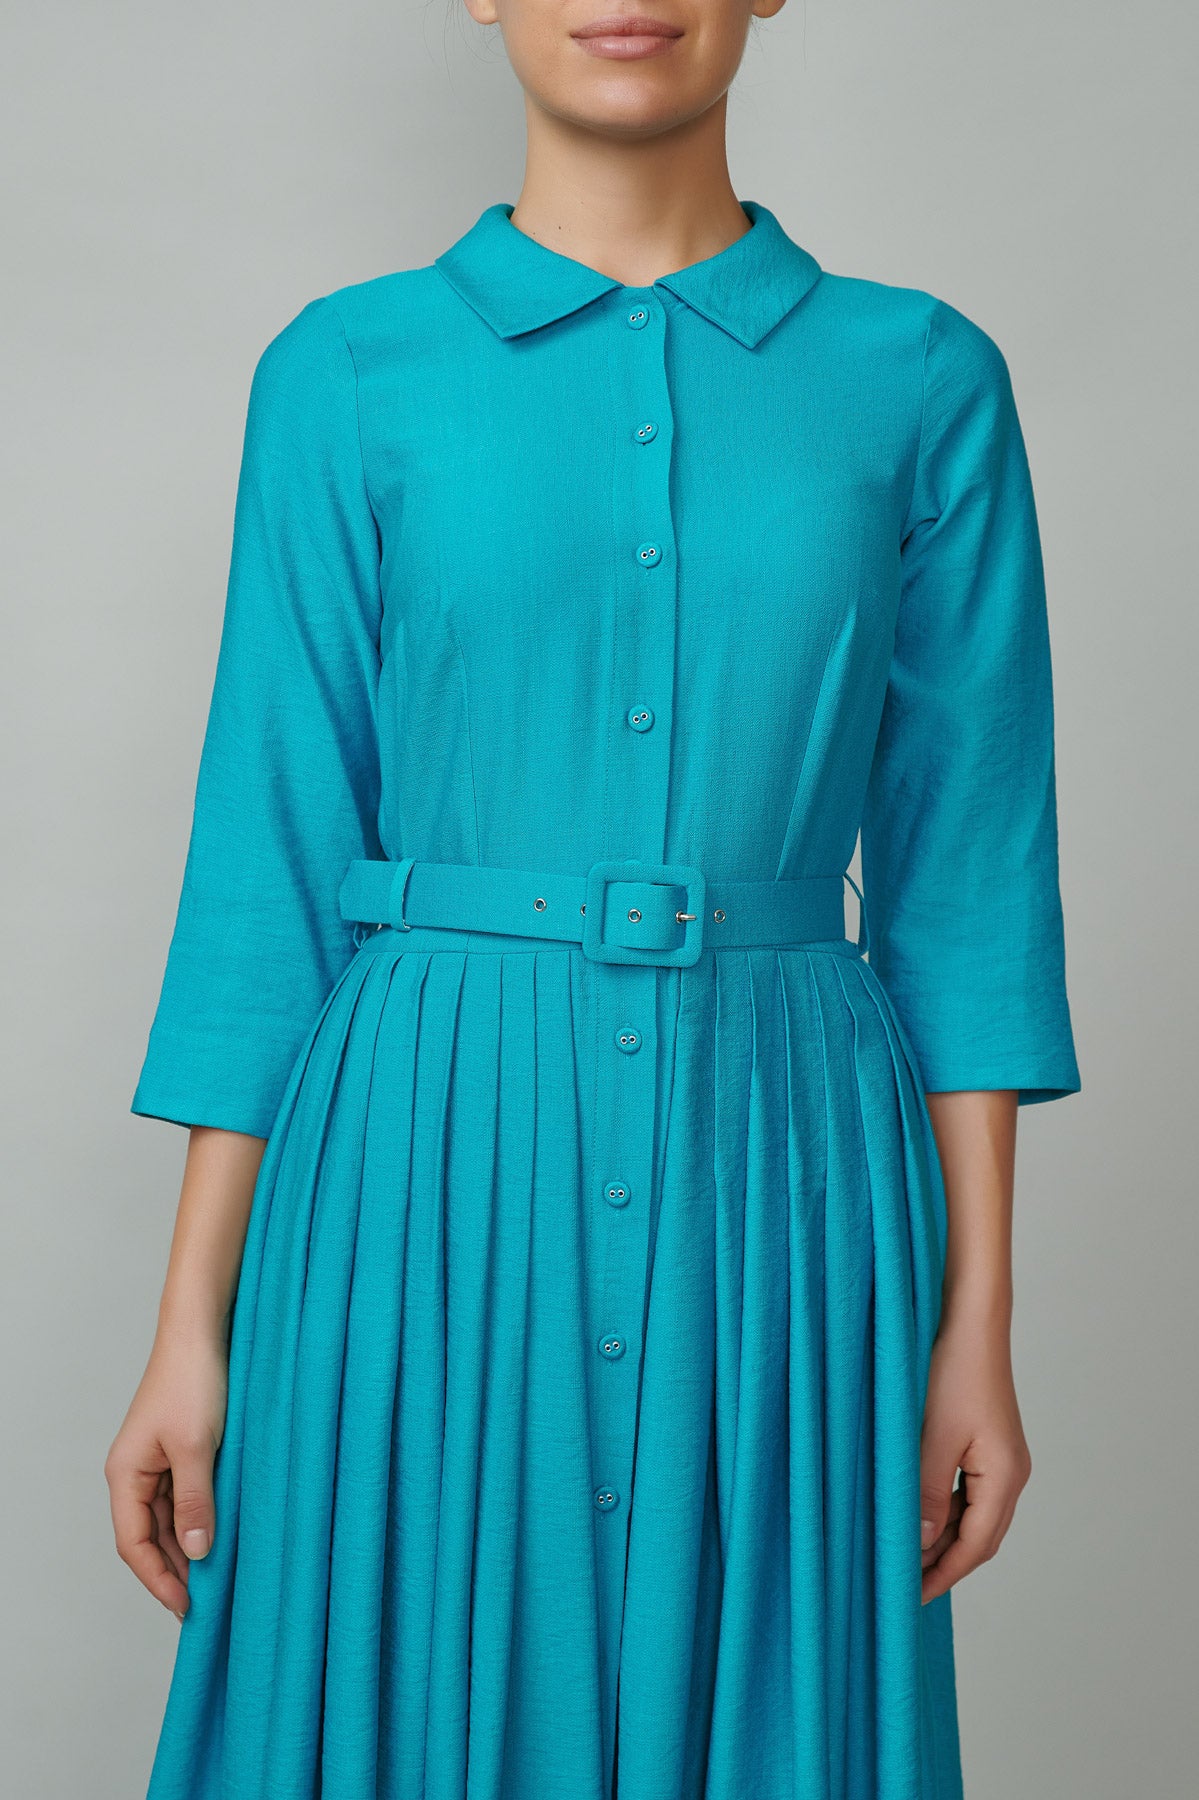 Turquoise shirt dress